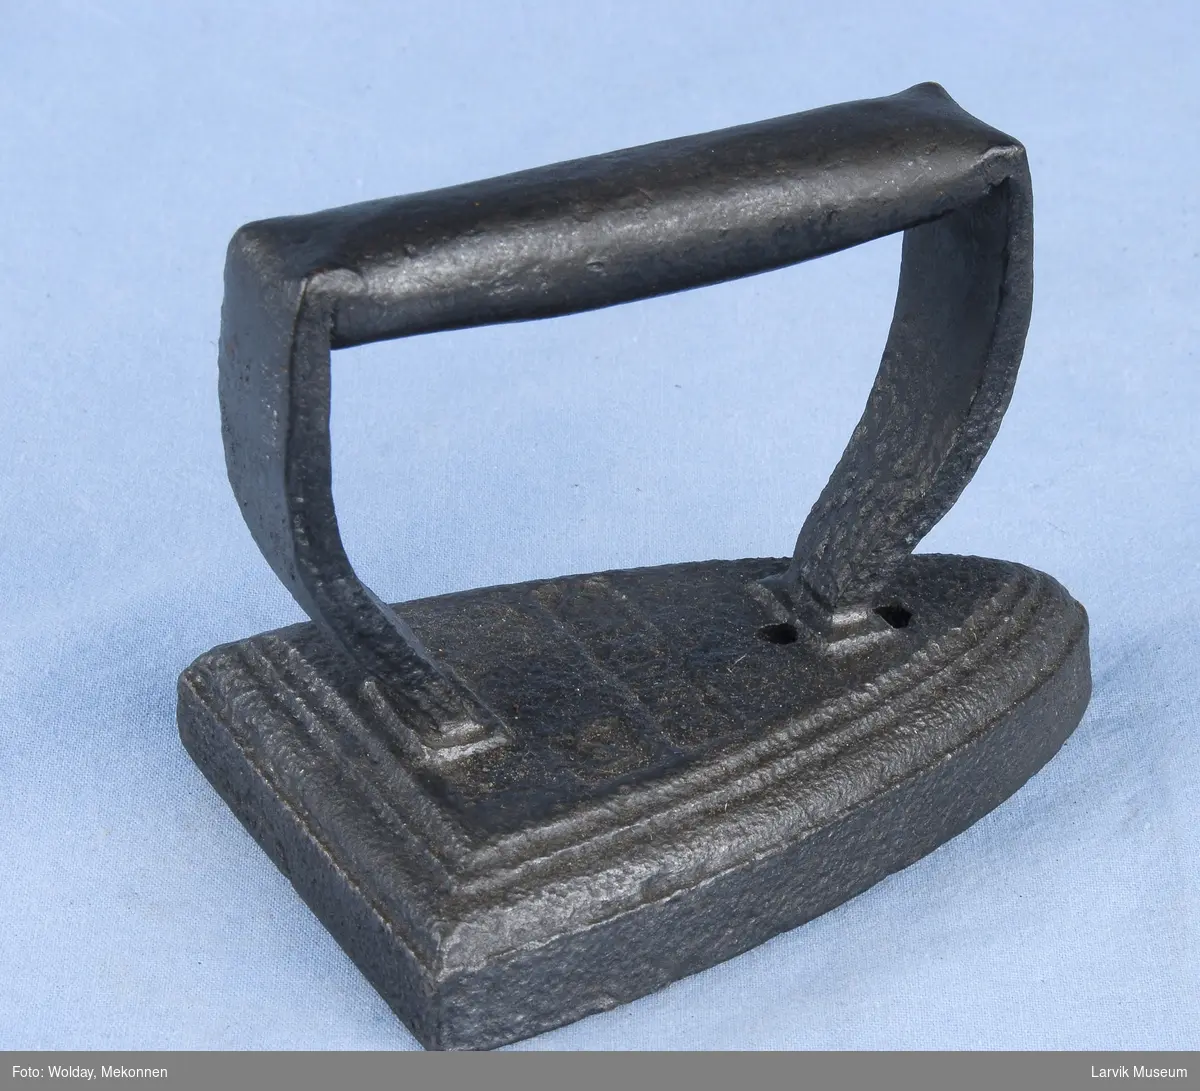 Form: håndtak og stativ i ett, smidd fast til jernet
